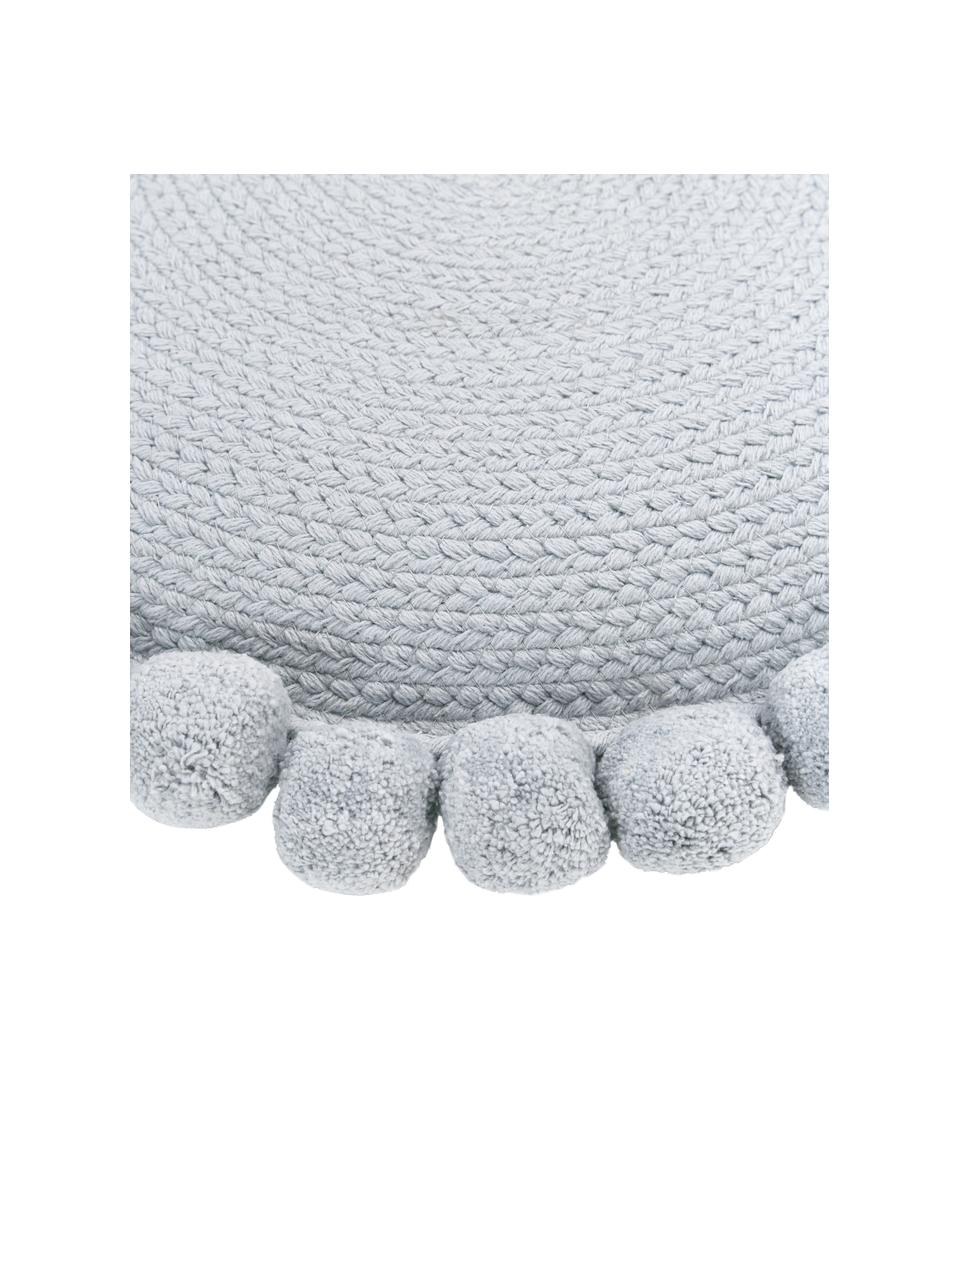 Cuscino arredo grigio con pompon Deva, Grigio, Ø 40 cm